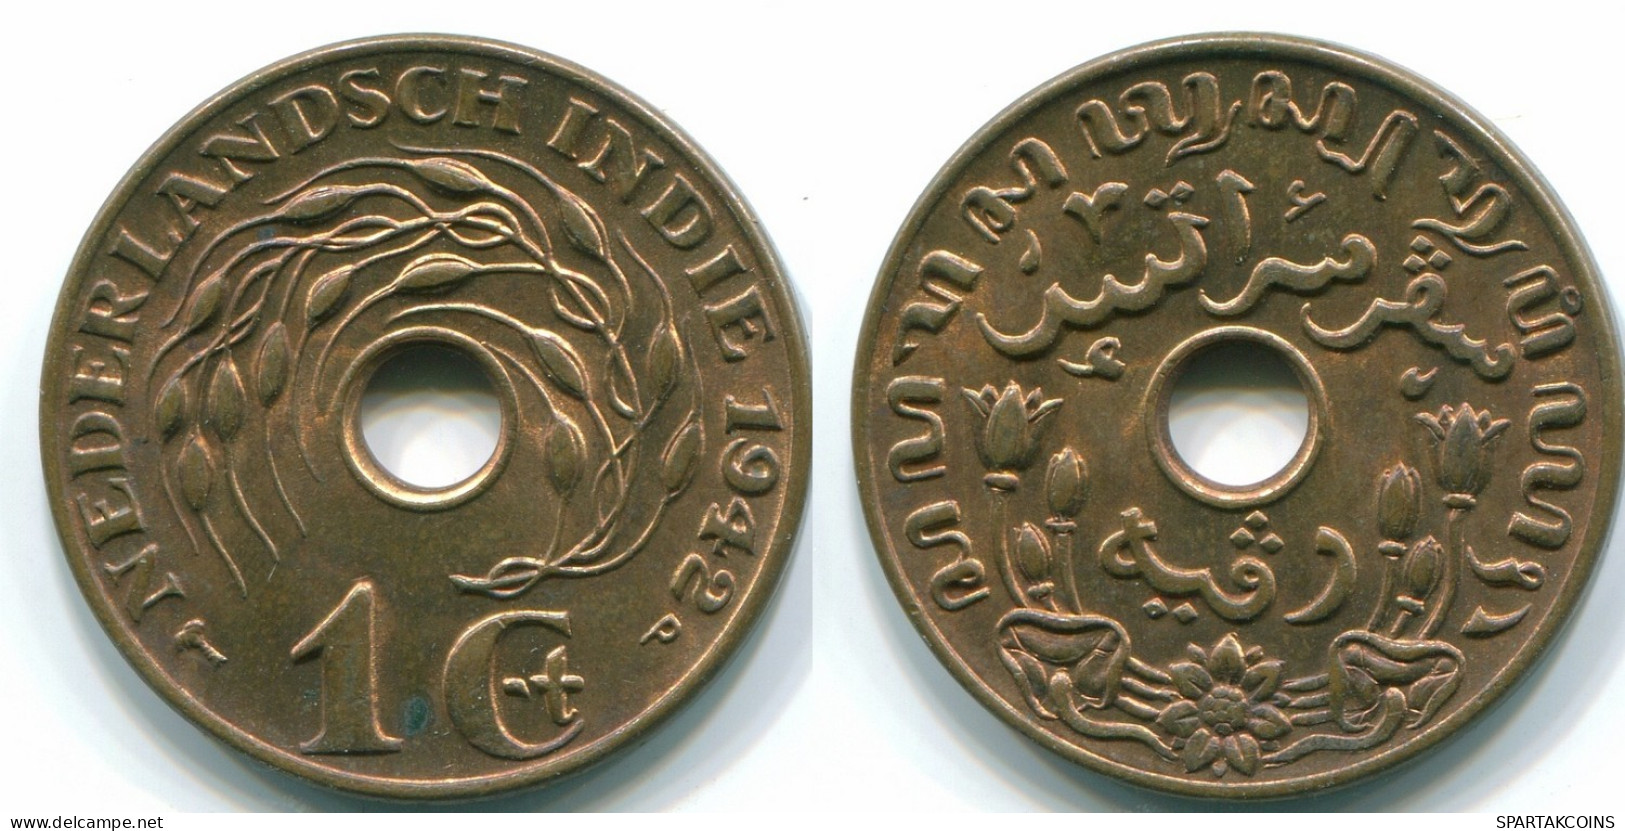 1 CENT 1942 INDES ORIENTALES NÉERLANDAISES INDONÉSIE INDONESIA Bronze Colonial Pièce #S10299.F.A - Niederländisch-Indien